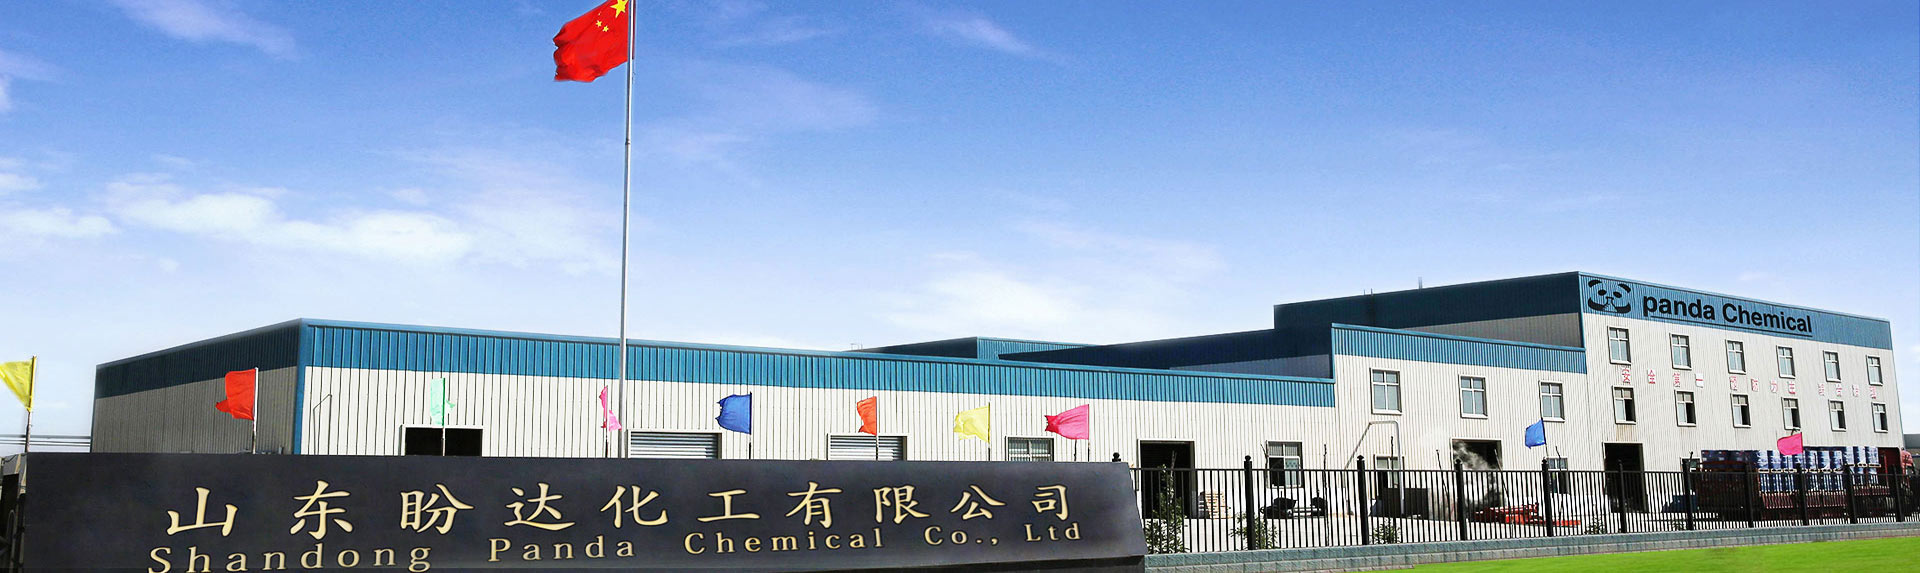 Shandong Panda Chemical Co., Ltd.